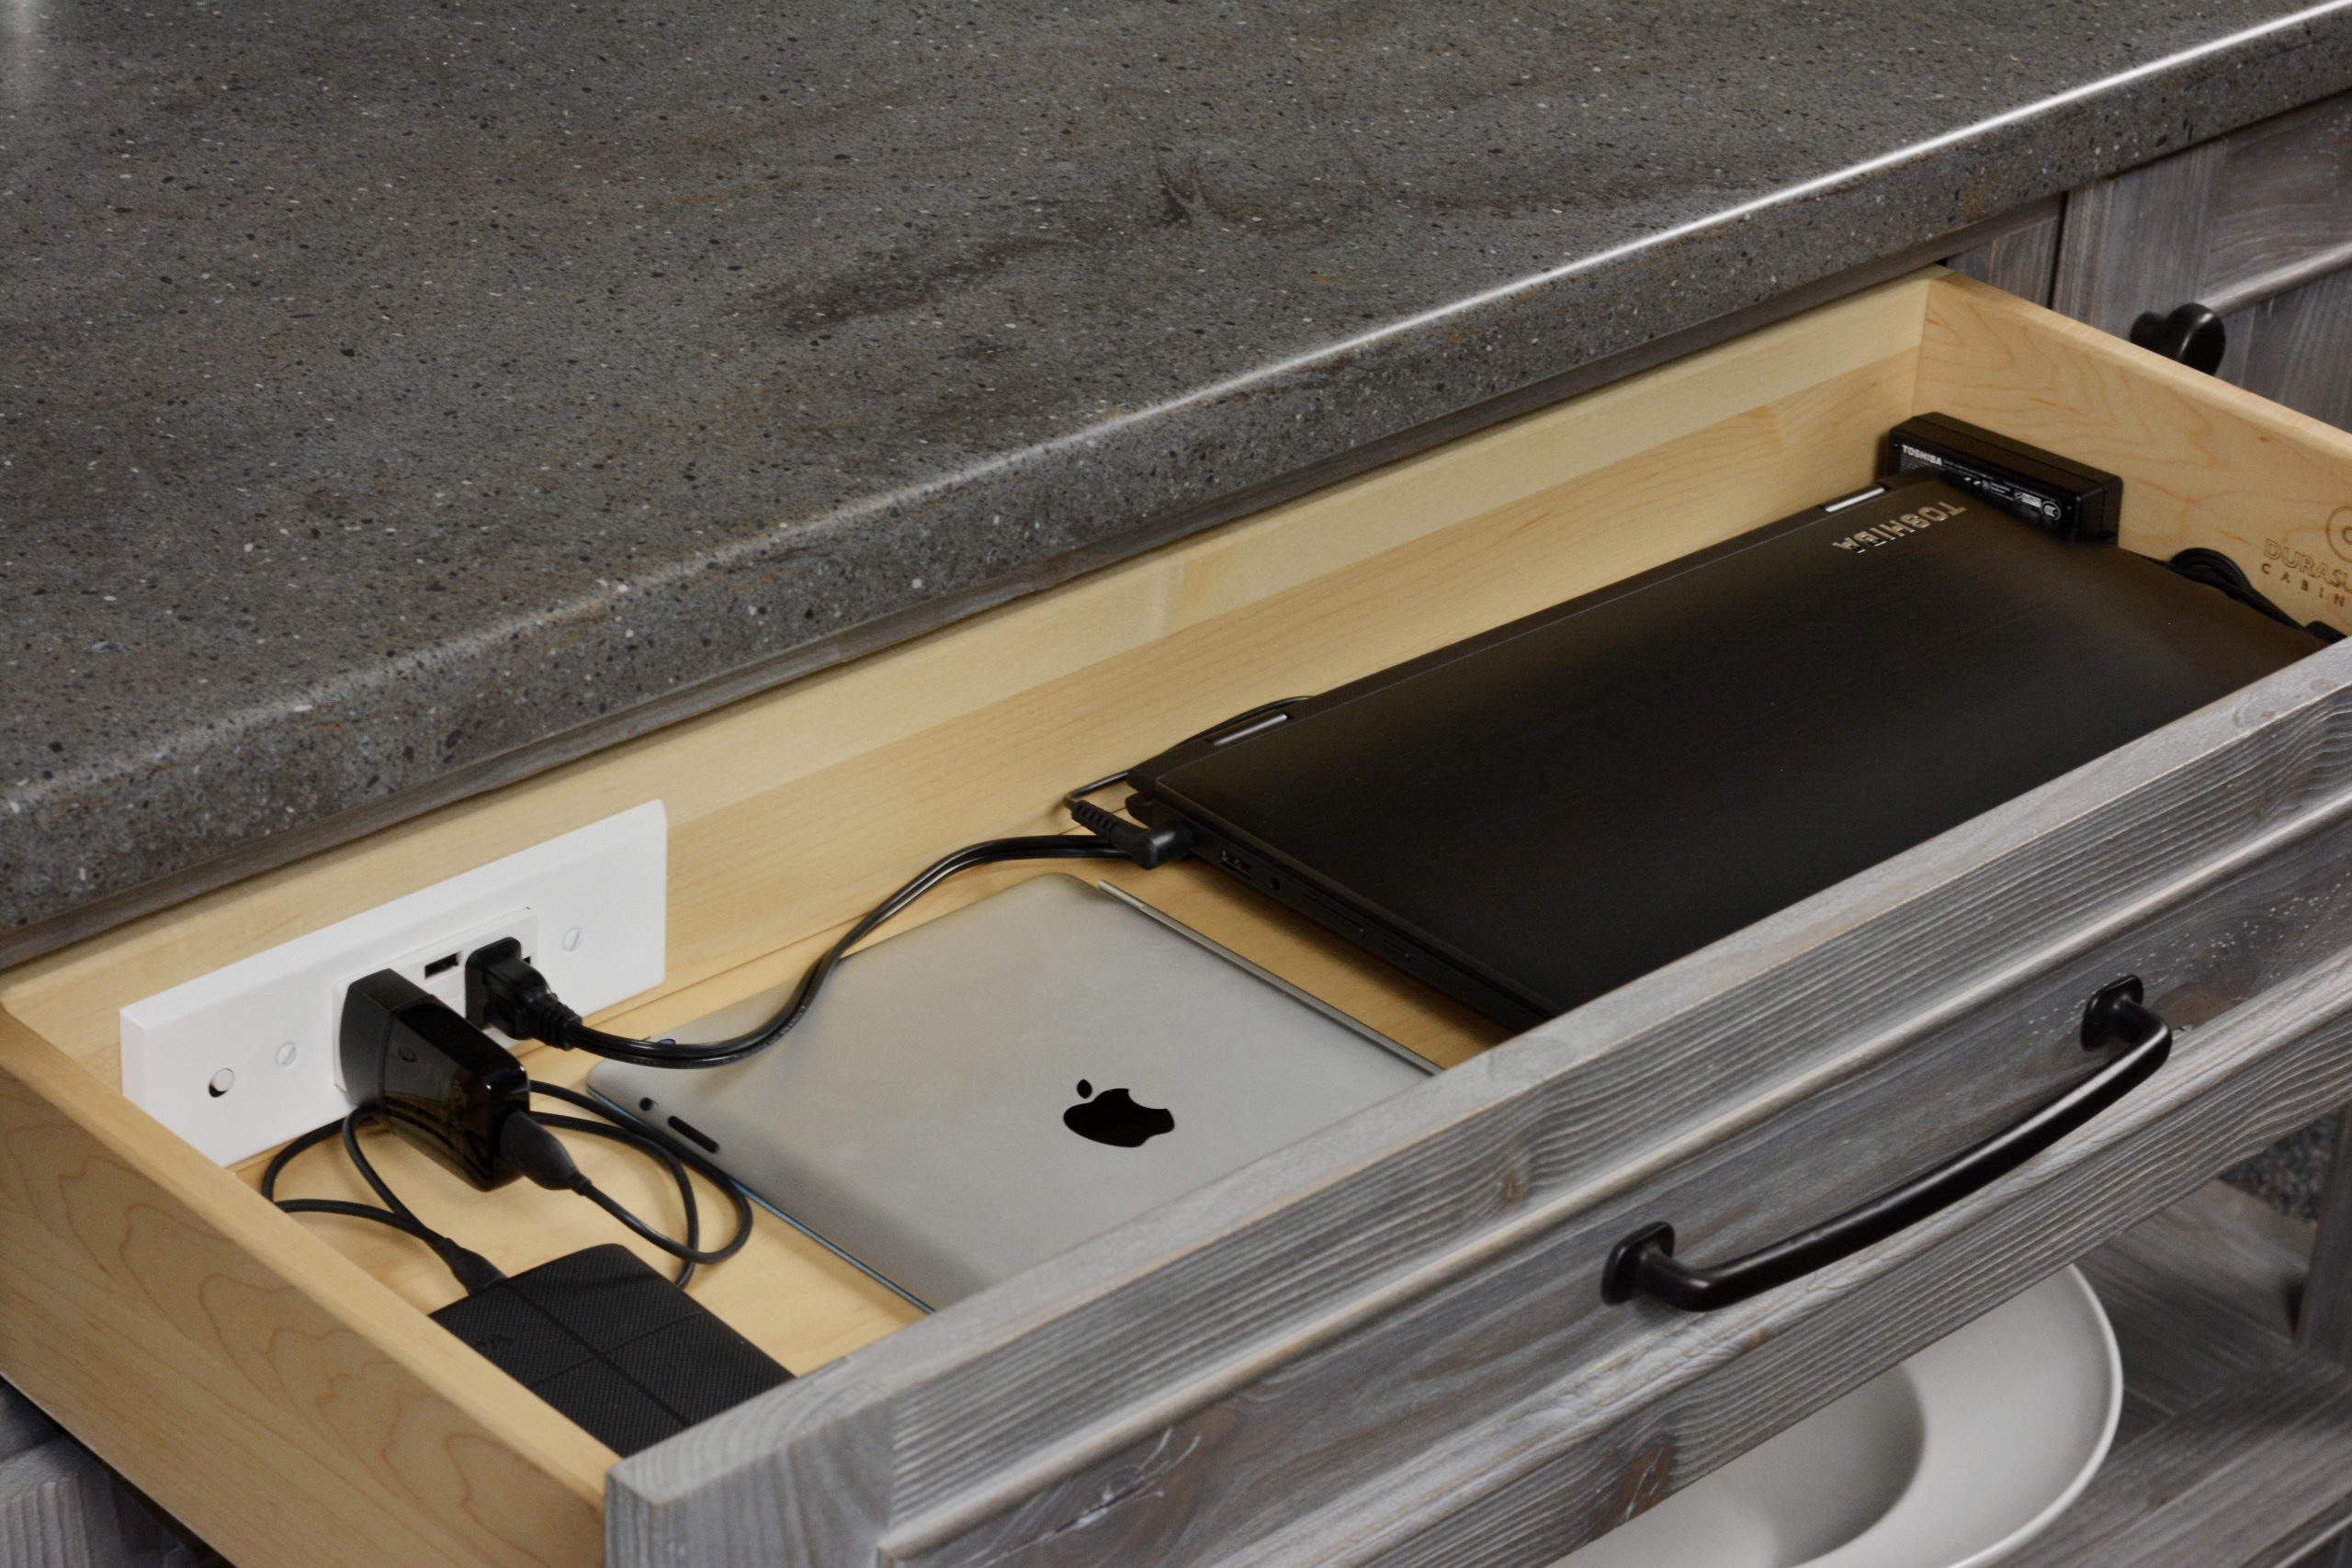 Kitchen drawer charging station to keep kitchen organized